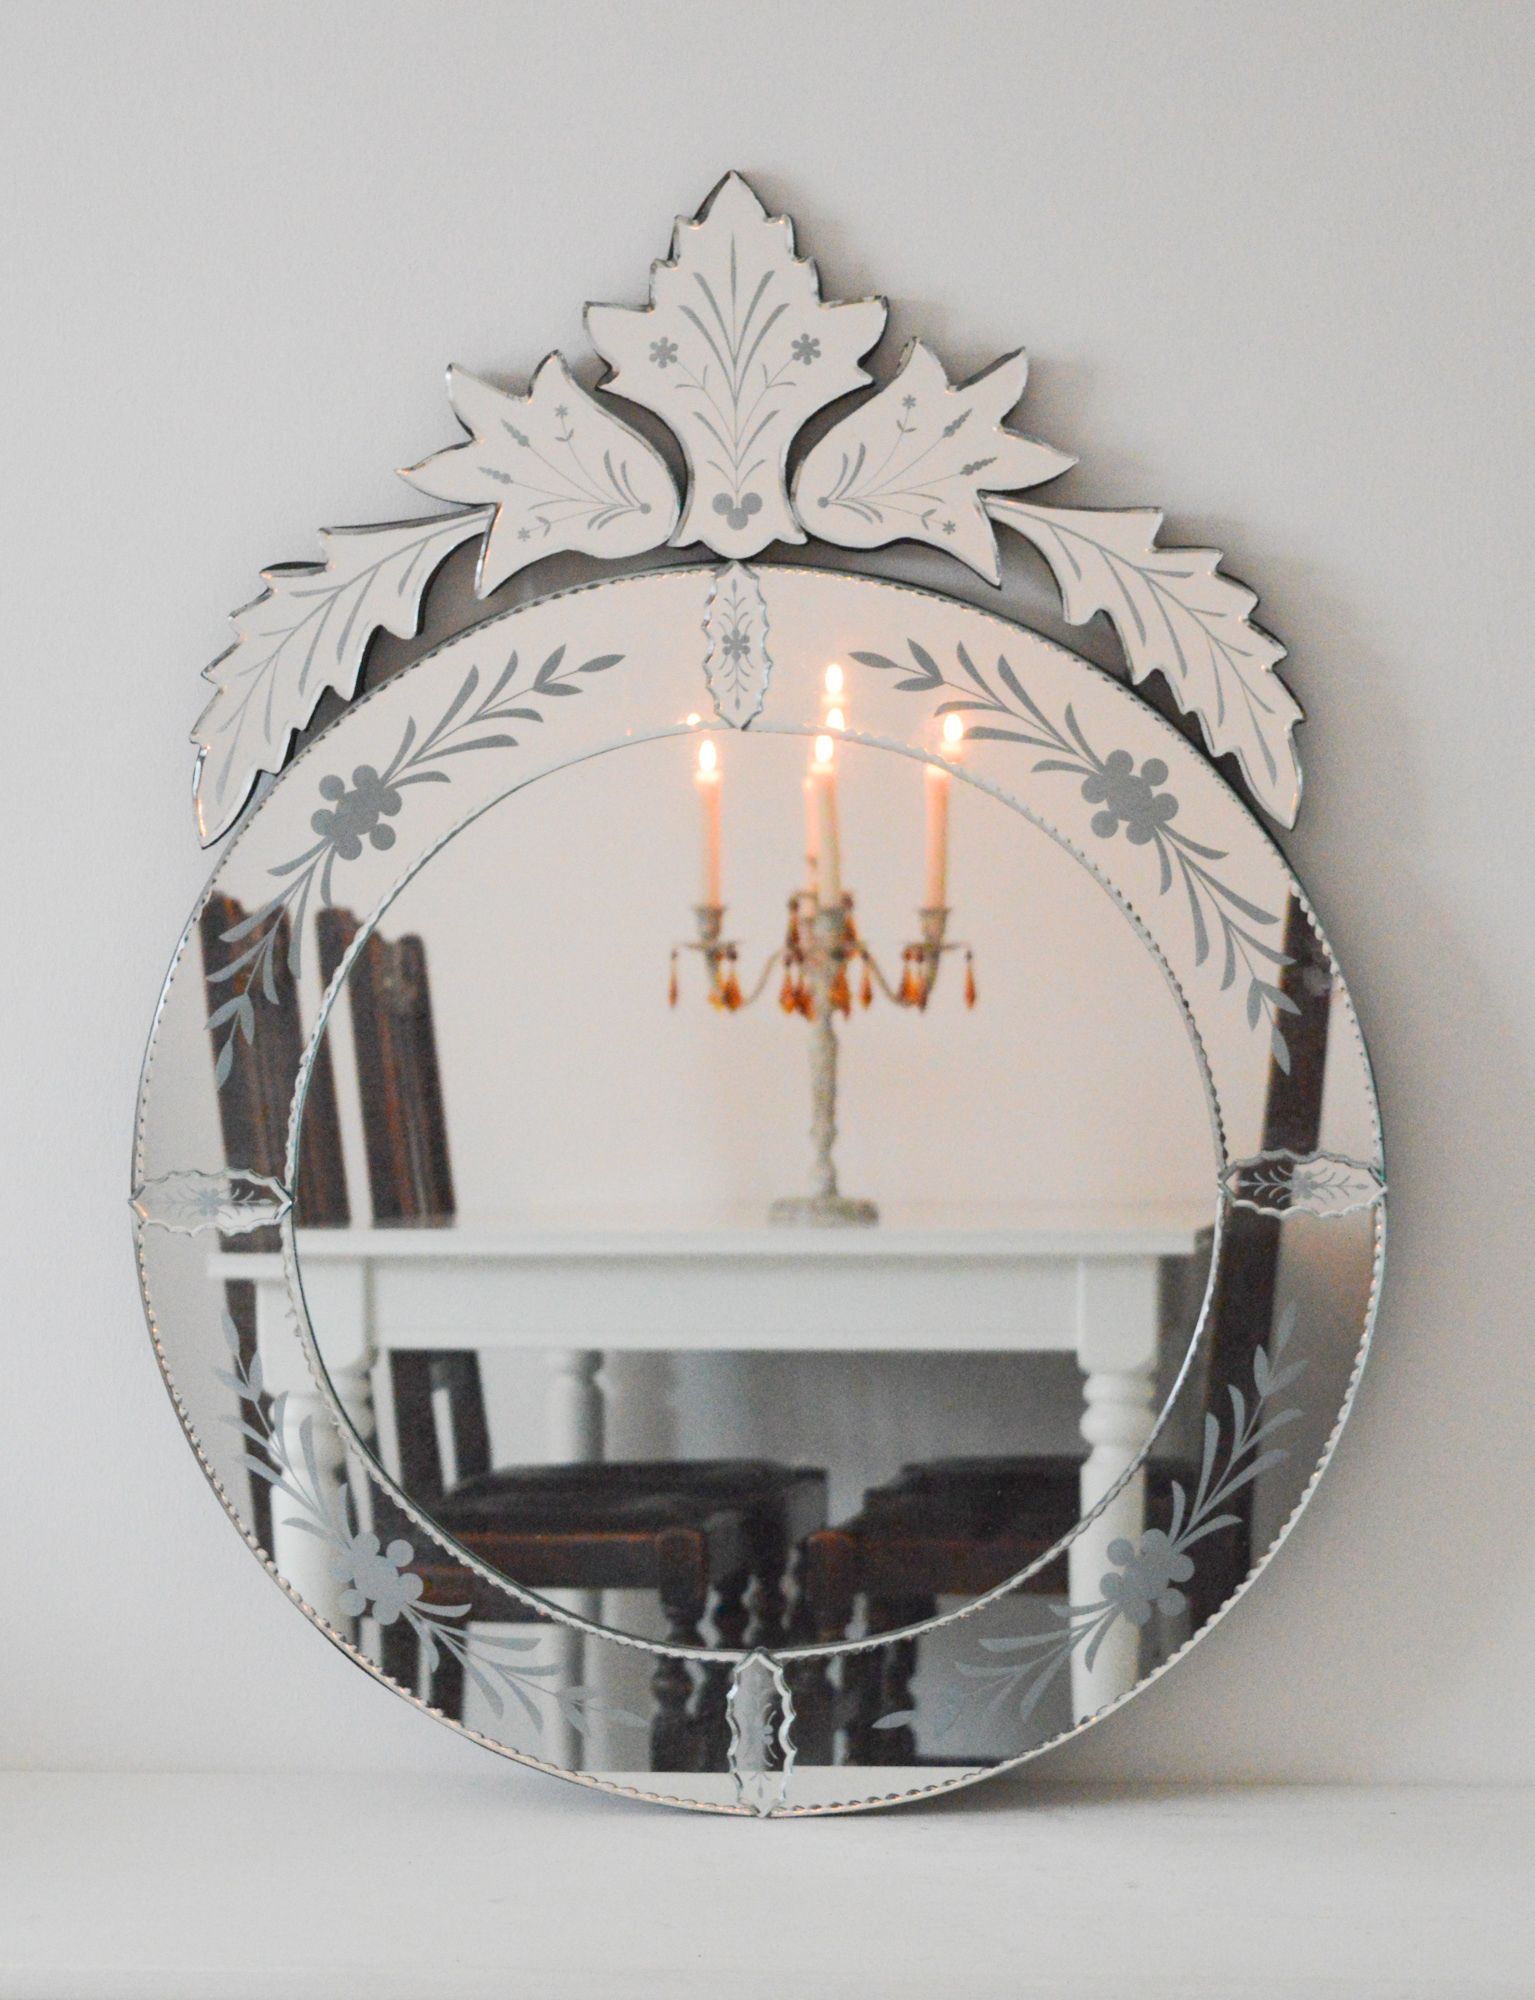 Vintage Venetian Style Wall Mirror, Large Round Decorative Mirror Pertaining To Matthias Round Accent Mirrors (View 8 of 15)